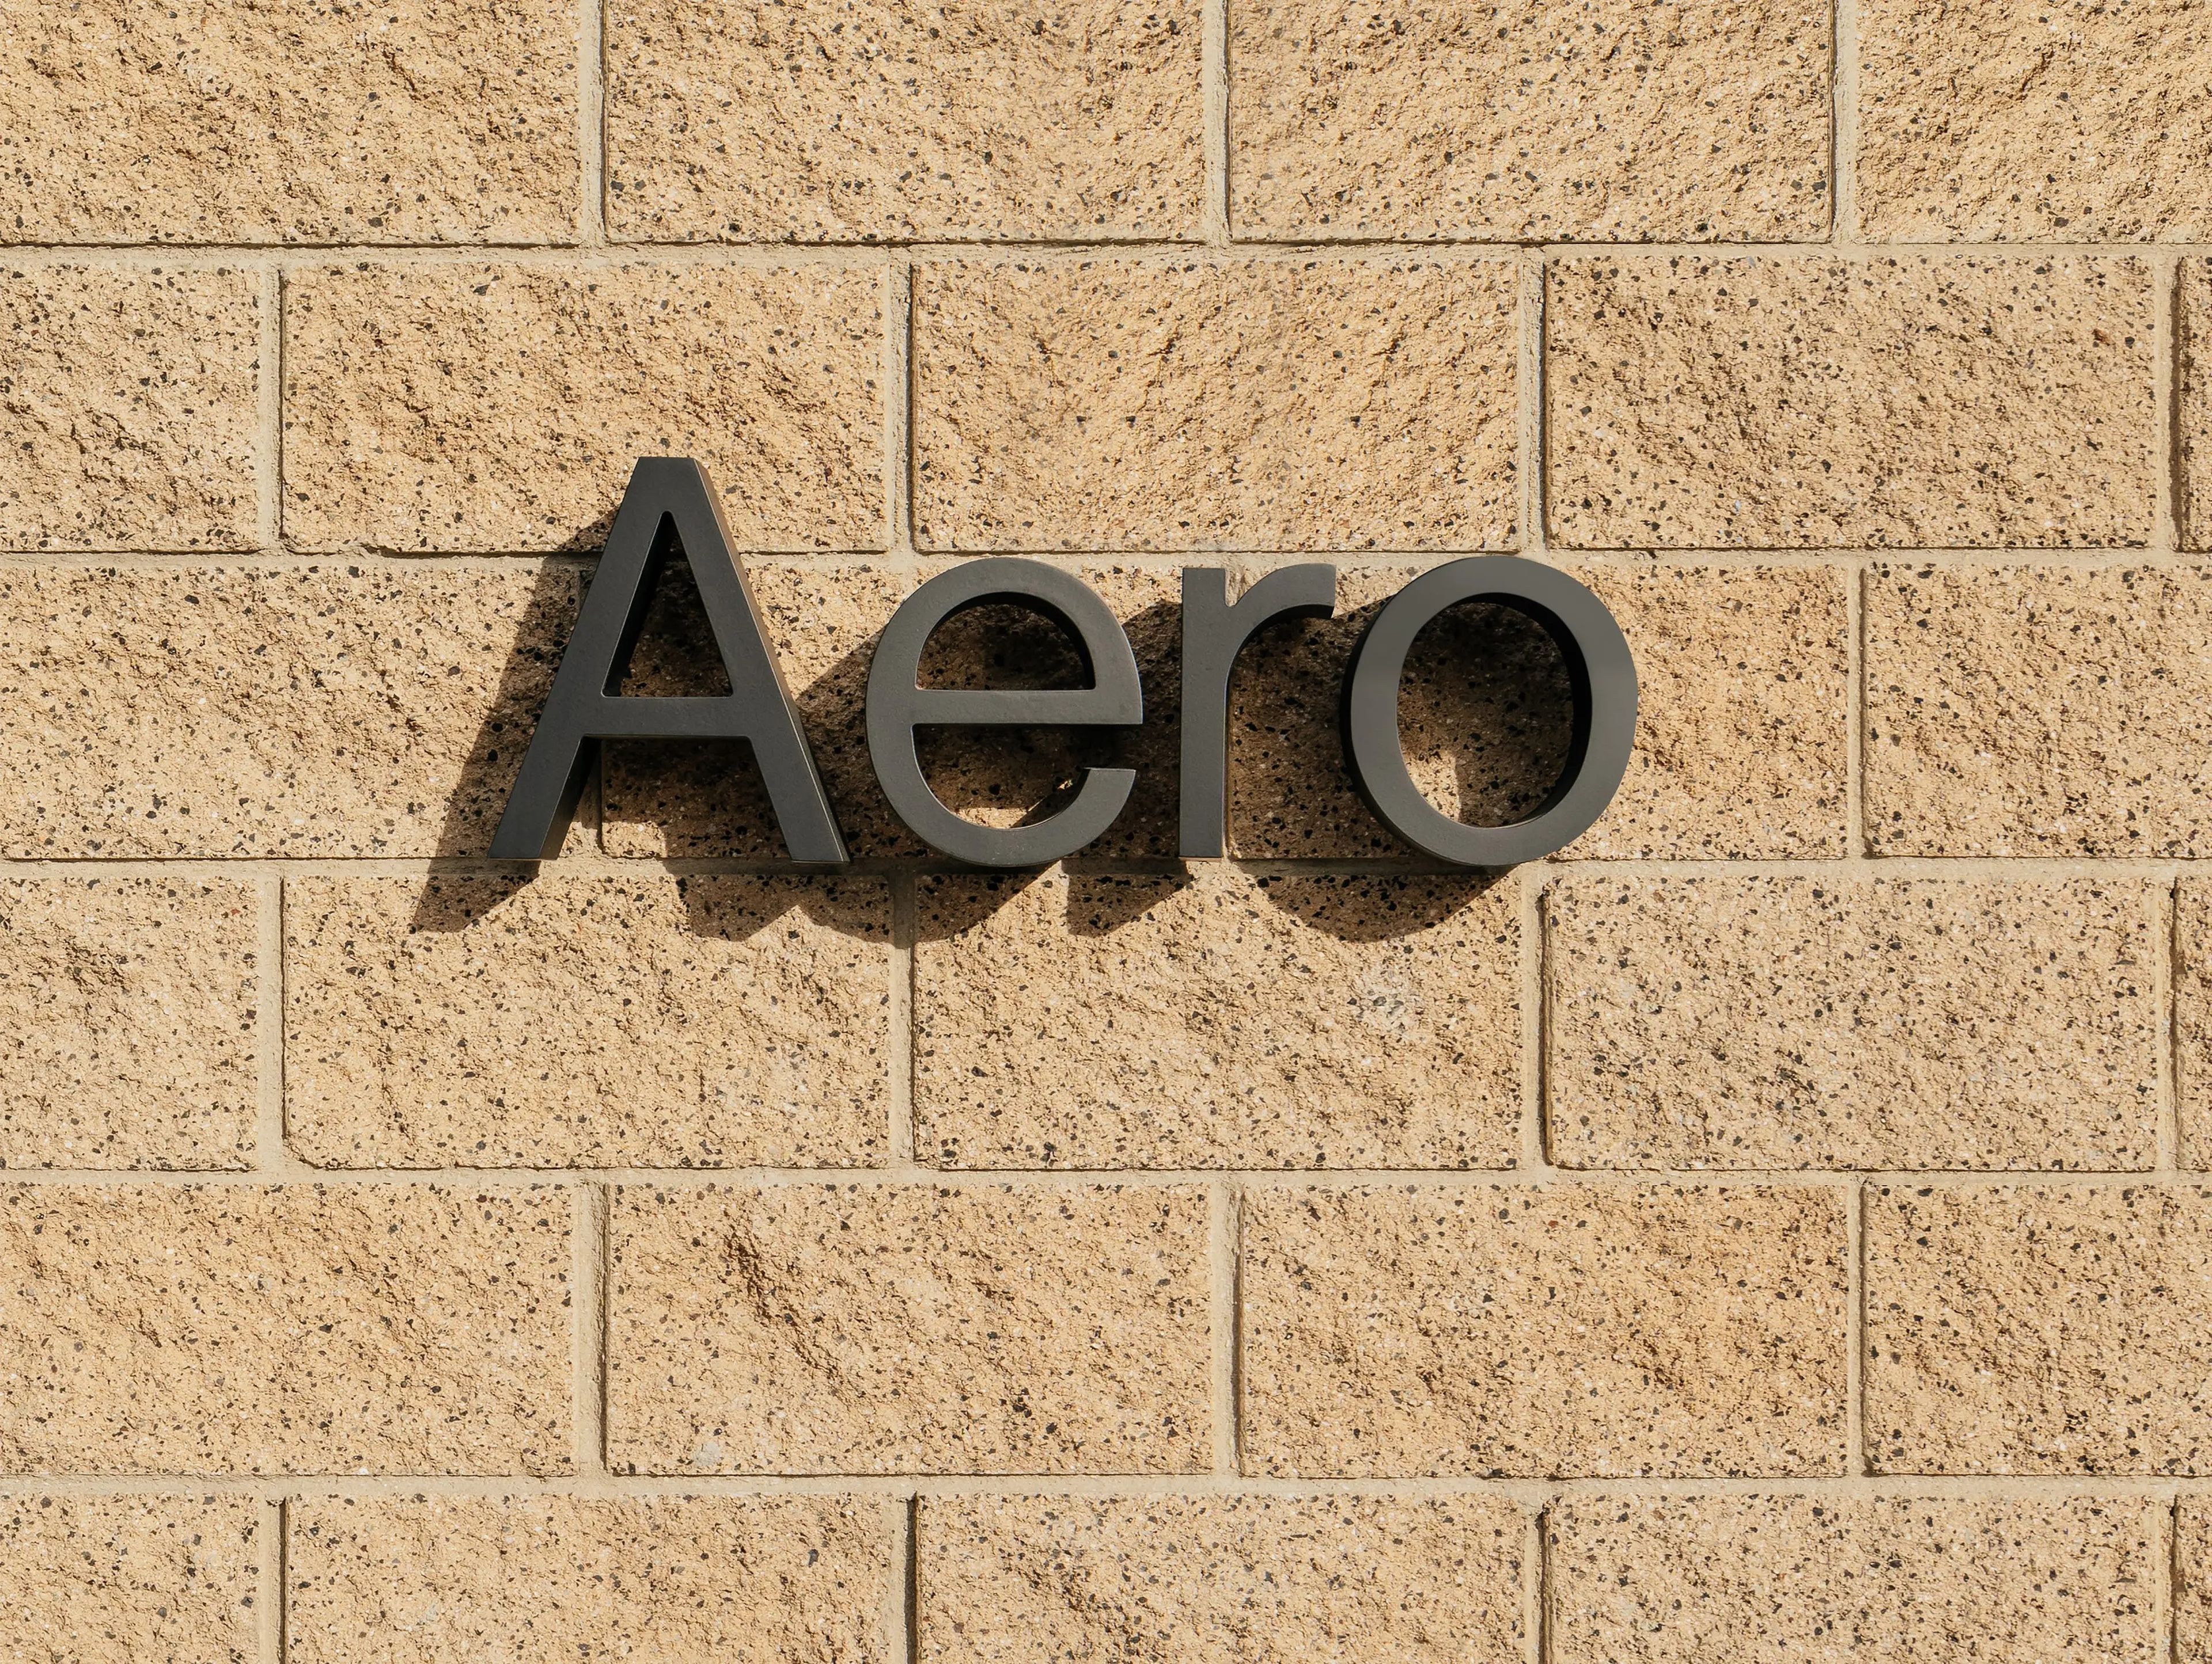 The Aero logo